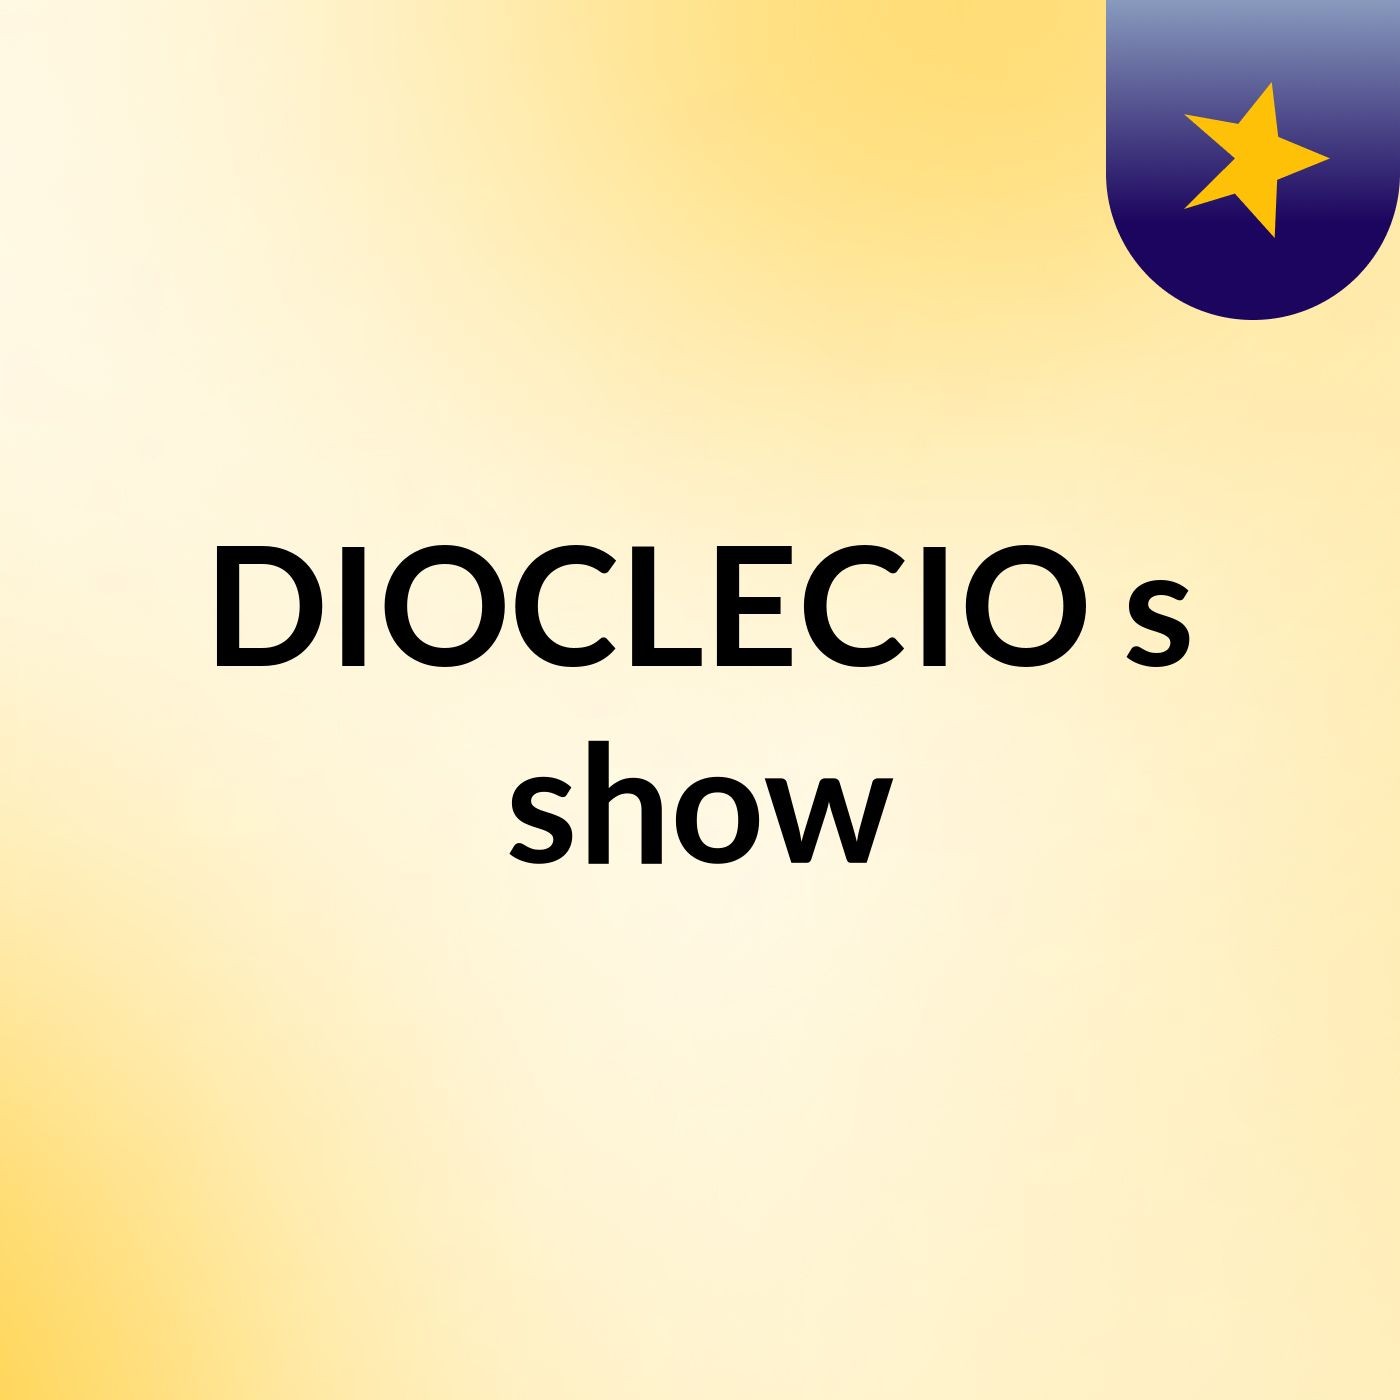 DIOCLECIO's show